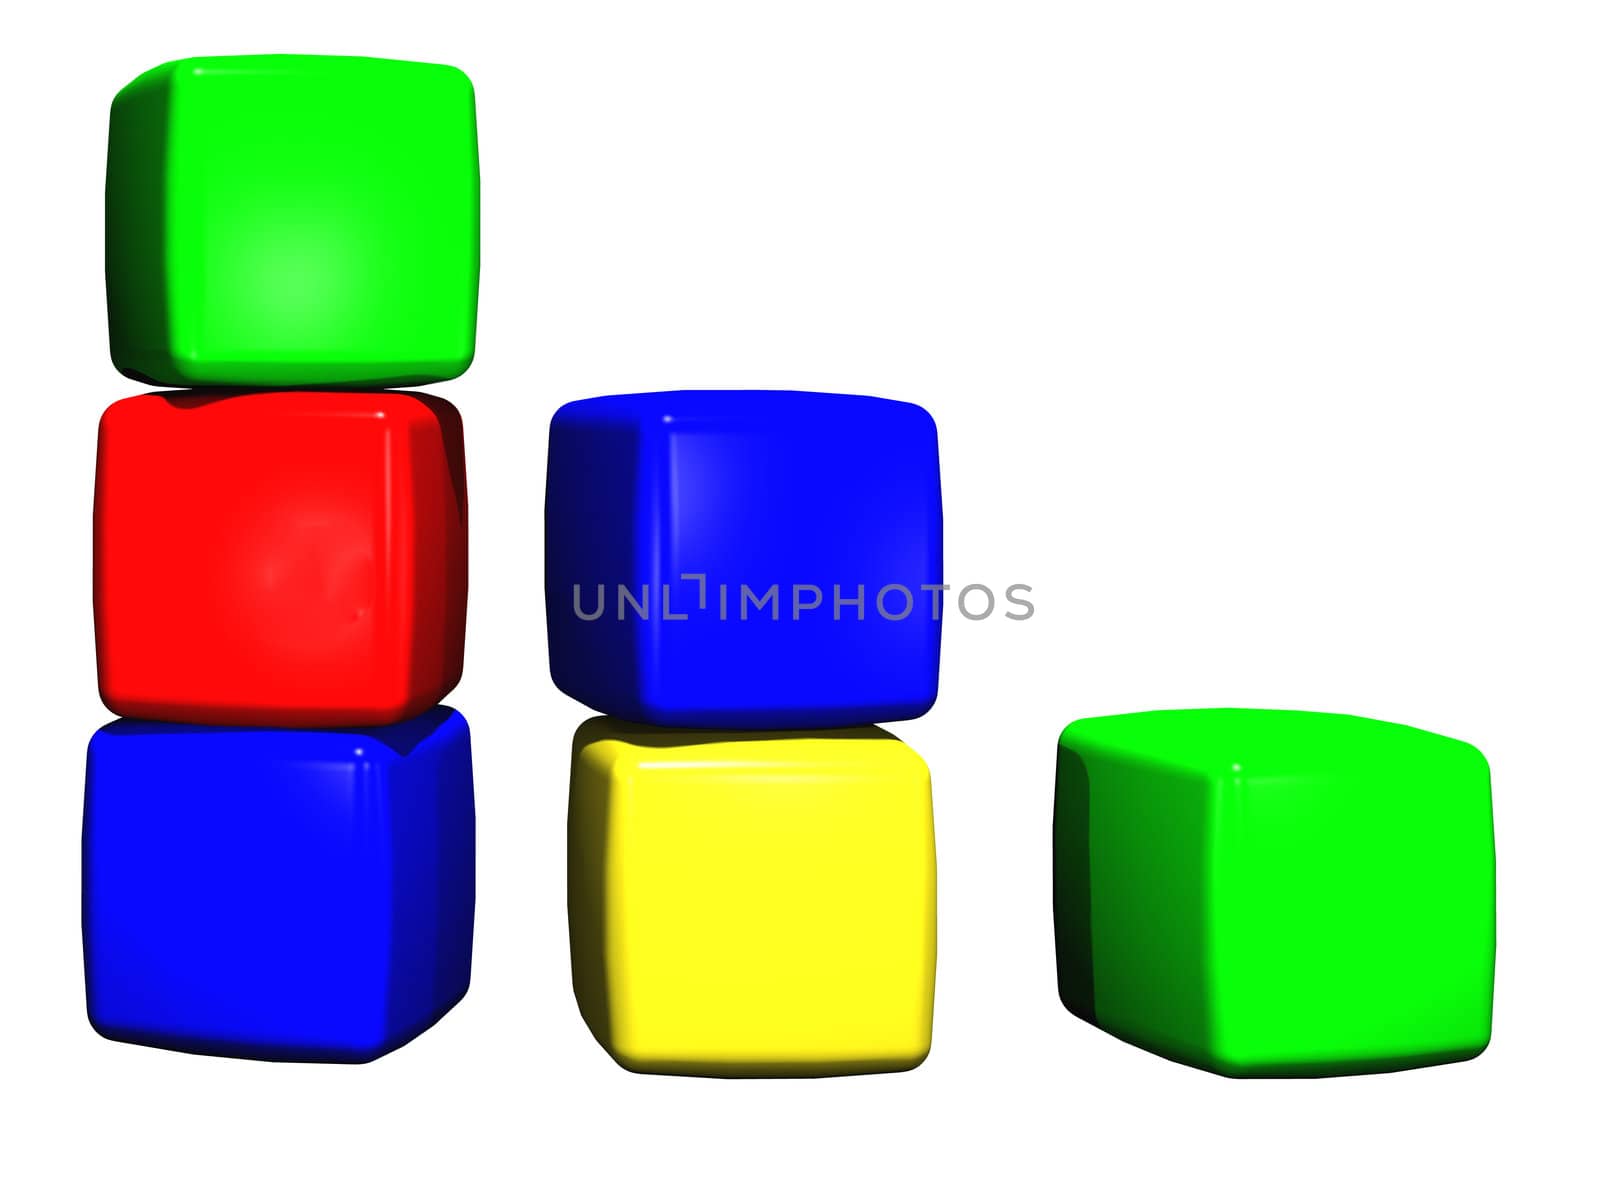 A colorful pile of plastic building blocks